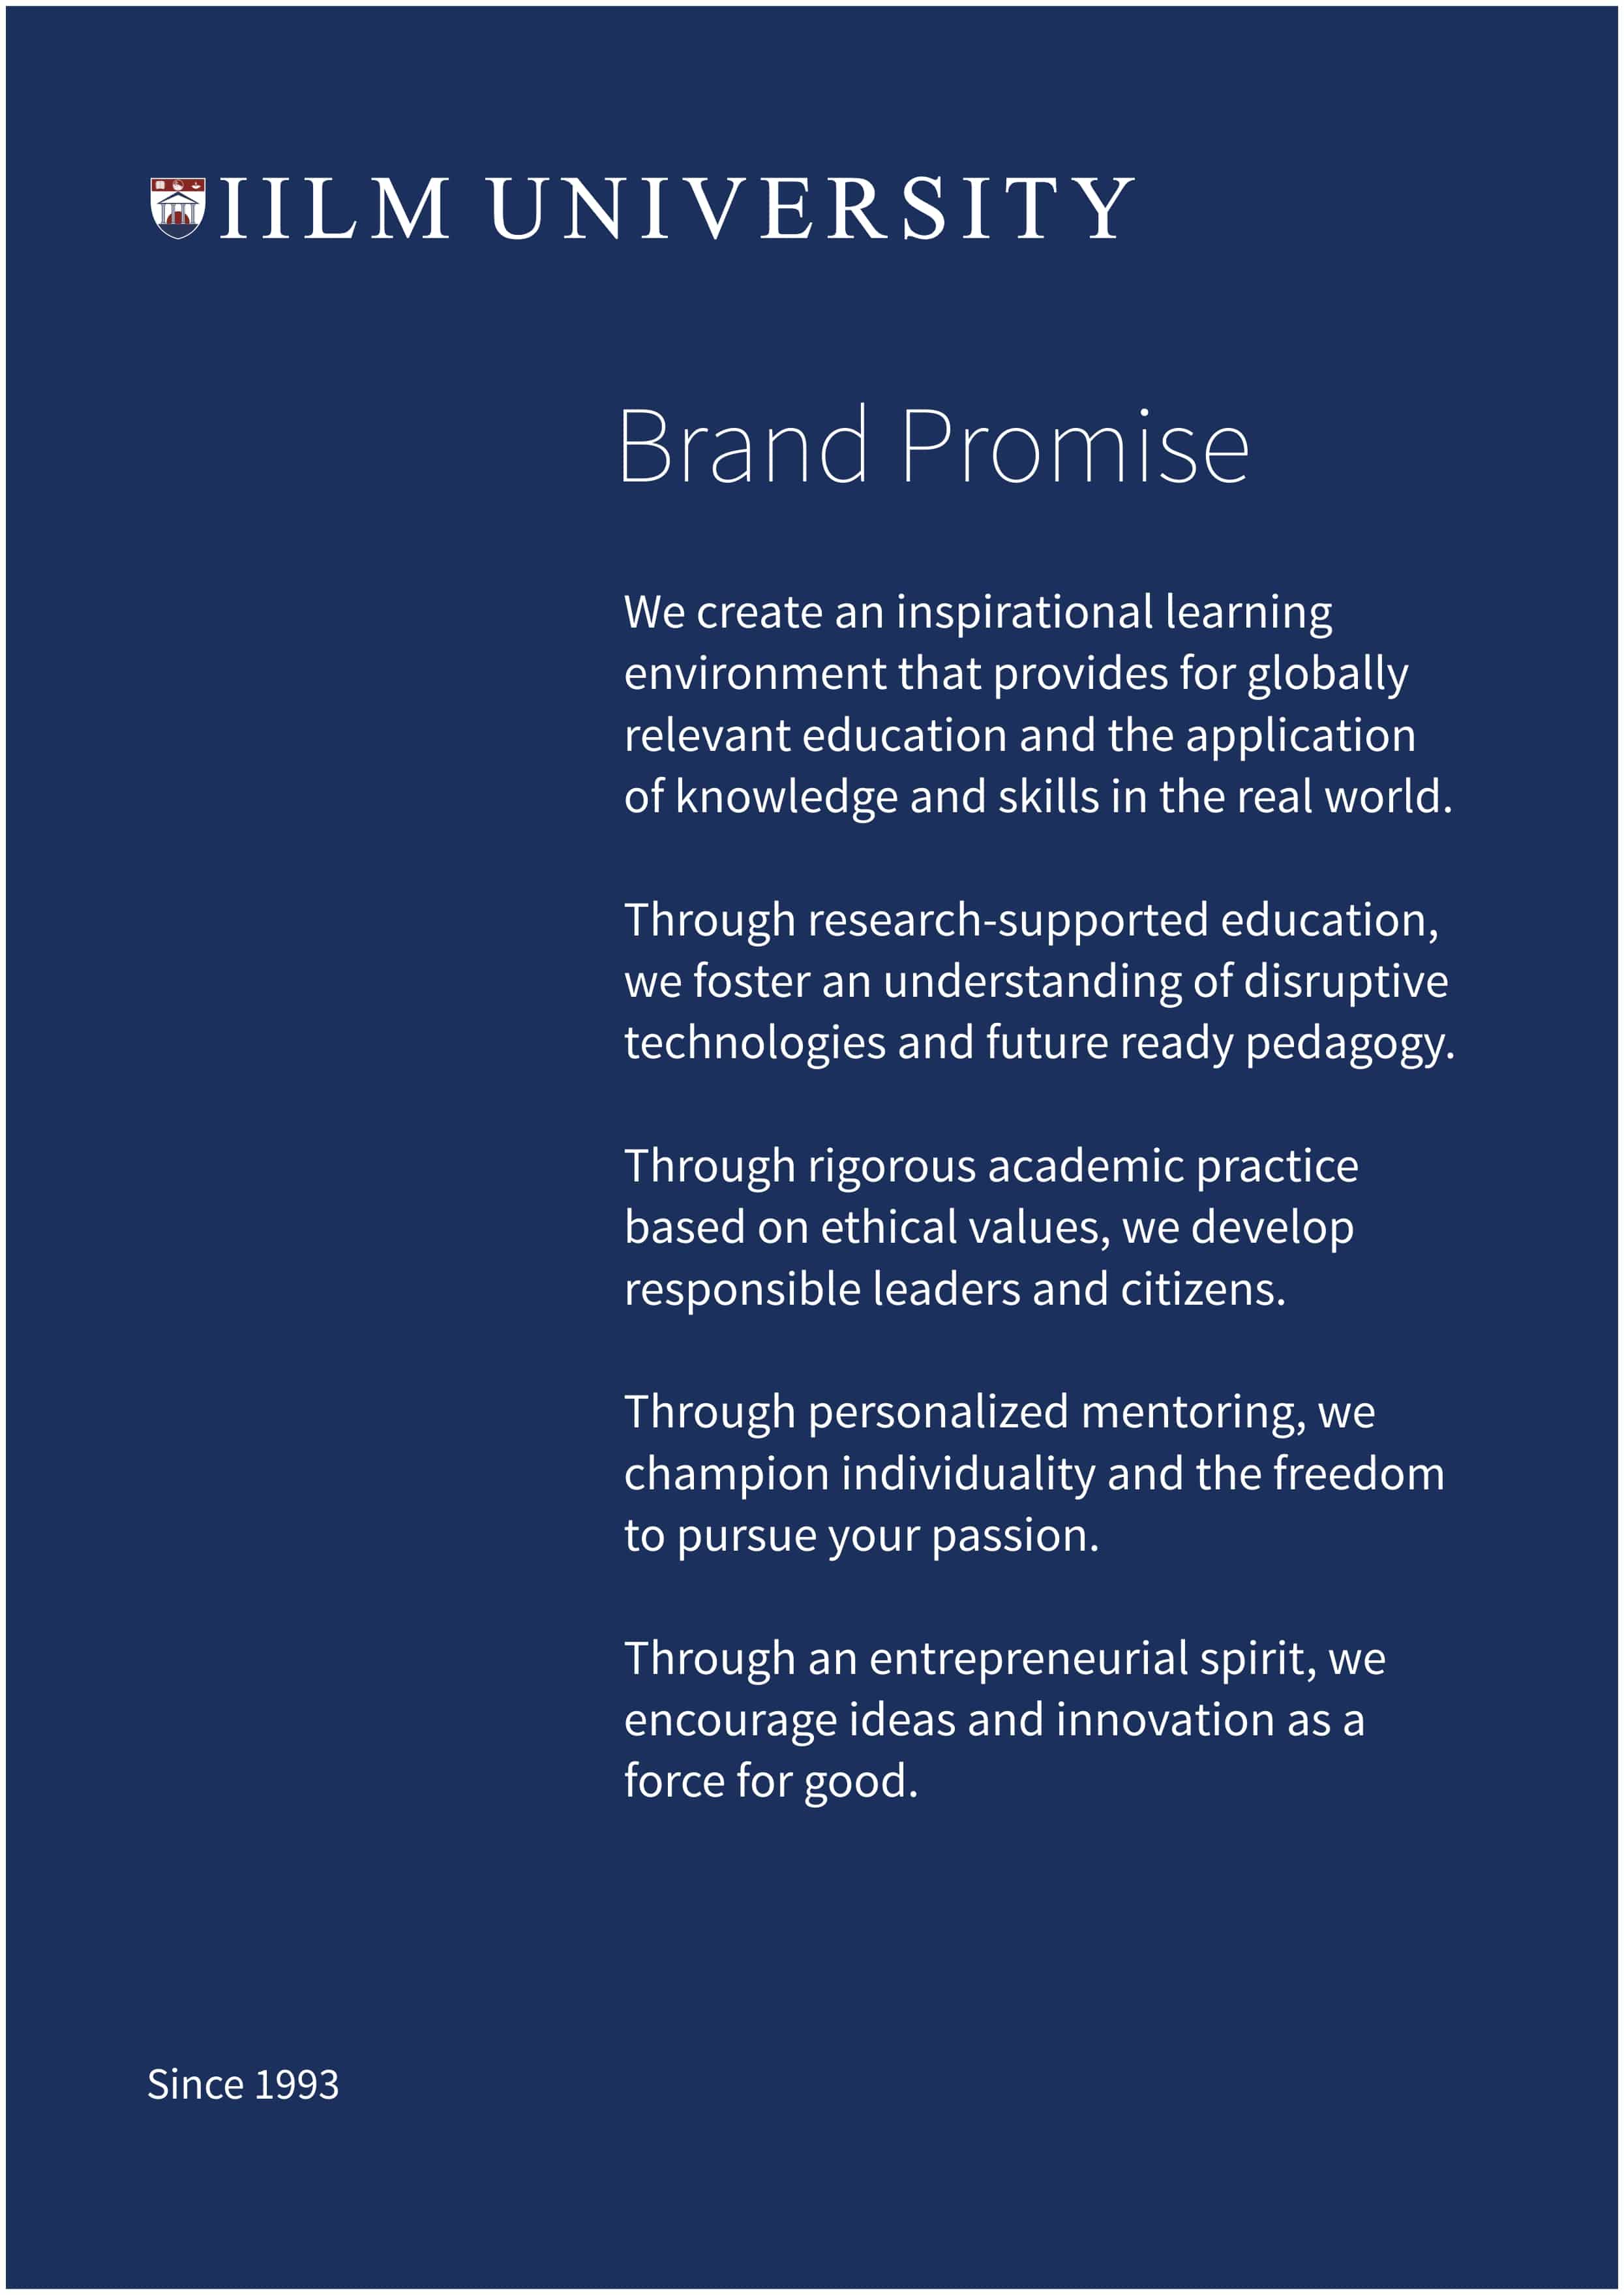 Brand promise